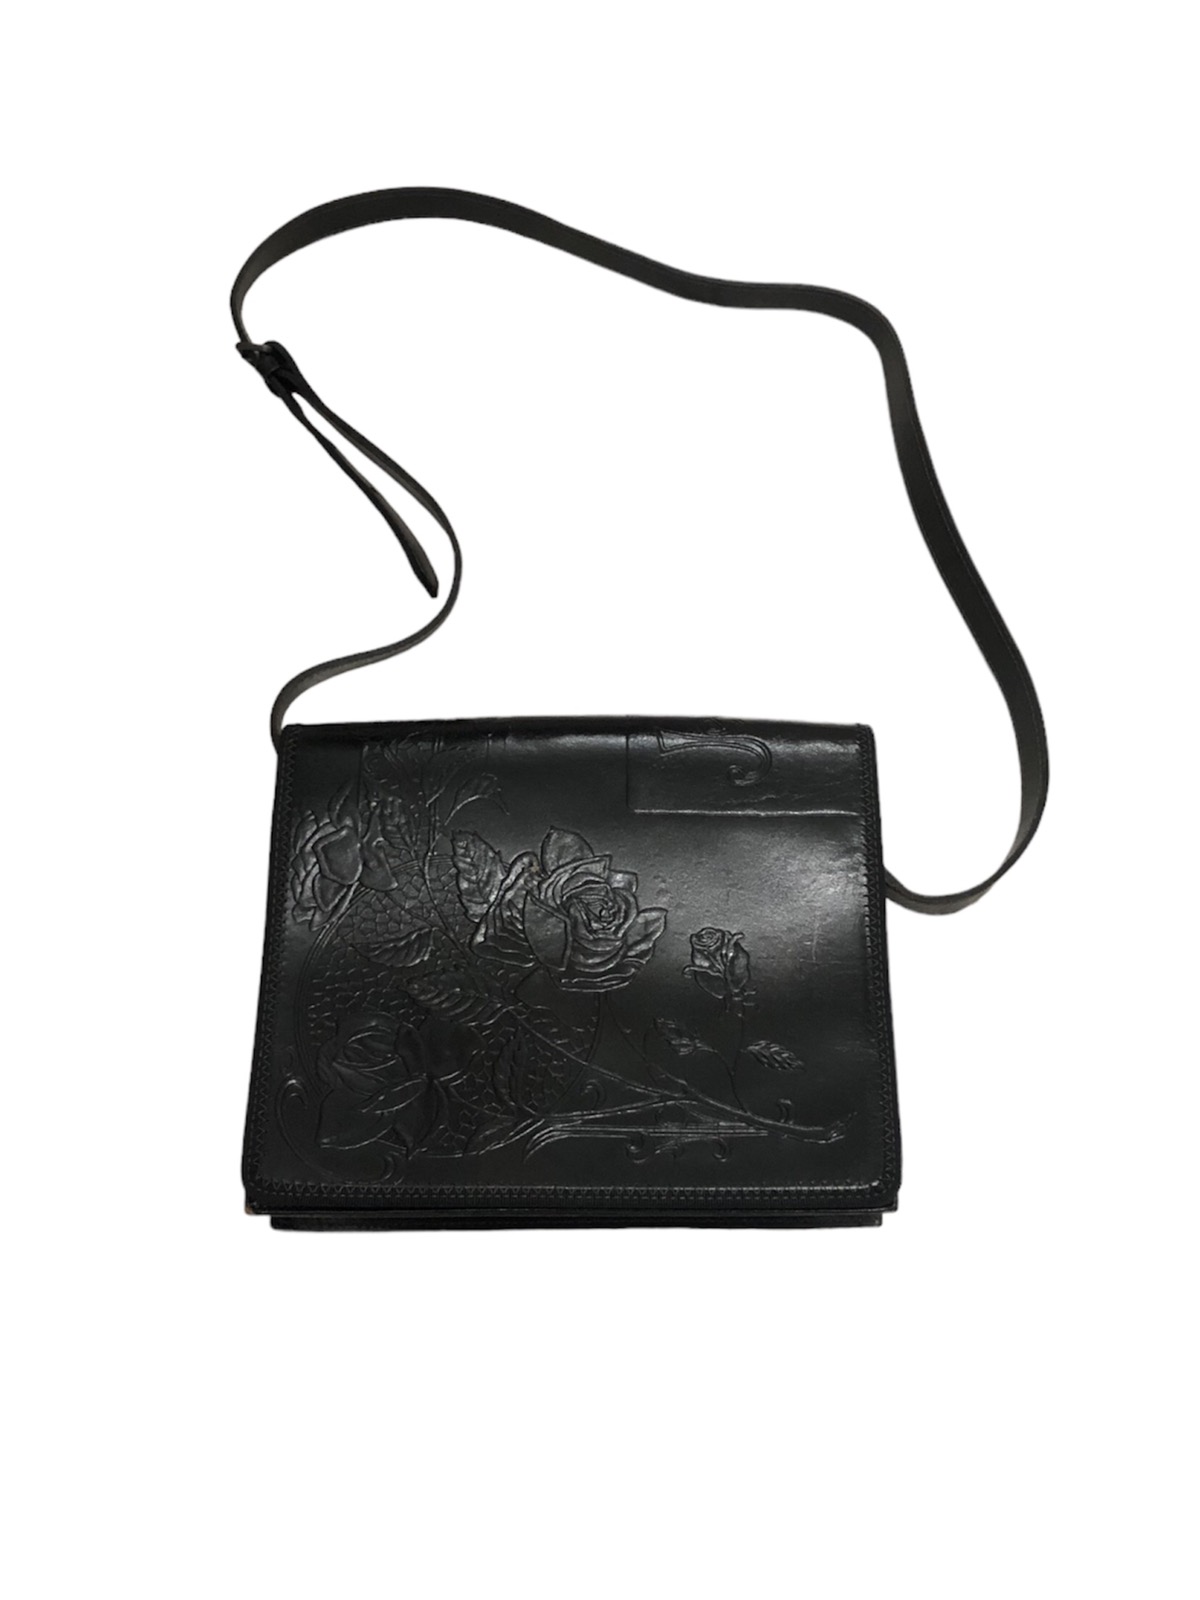 Archive JPG leather carve handbag - 1